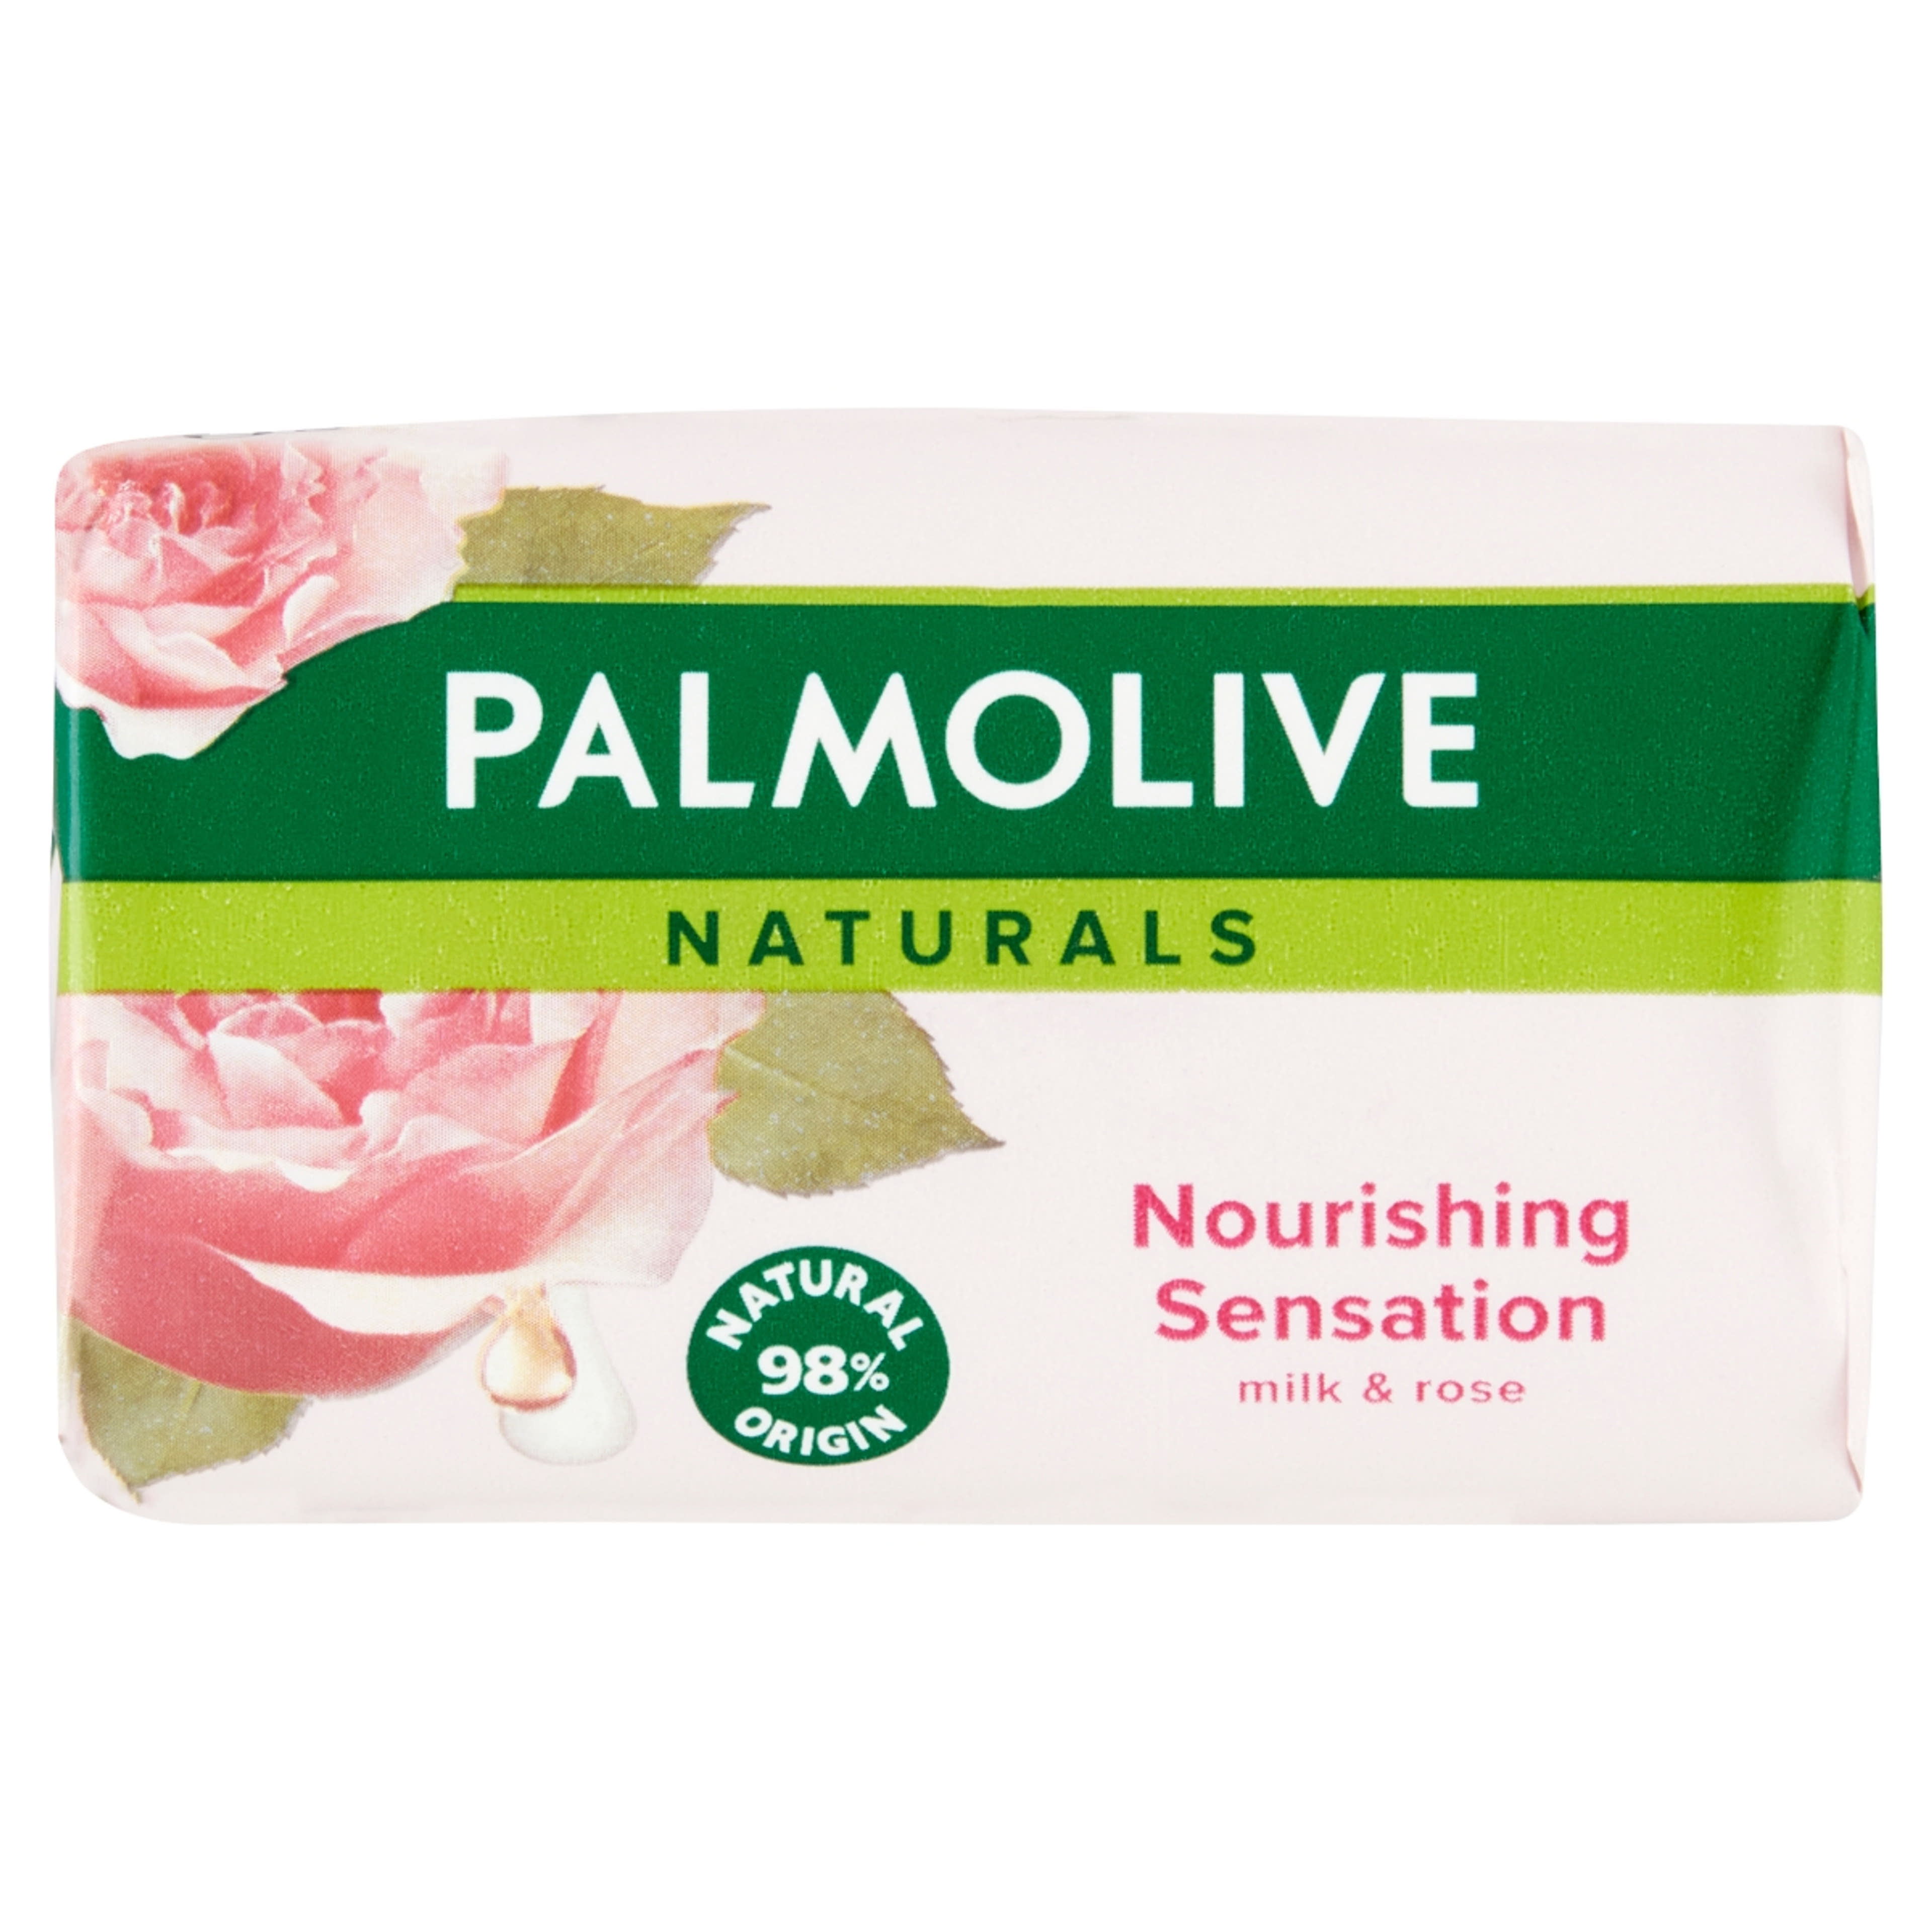 Palmolive Naturals Nourishing Sensation pipereszappan tej- és rózsaszirom-kivonattal - 90 g